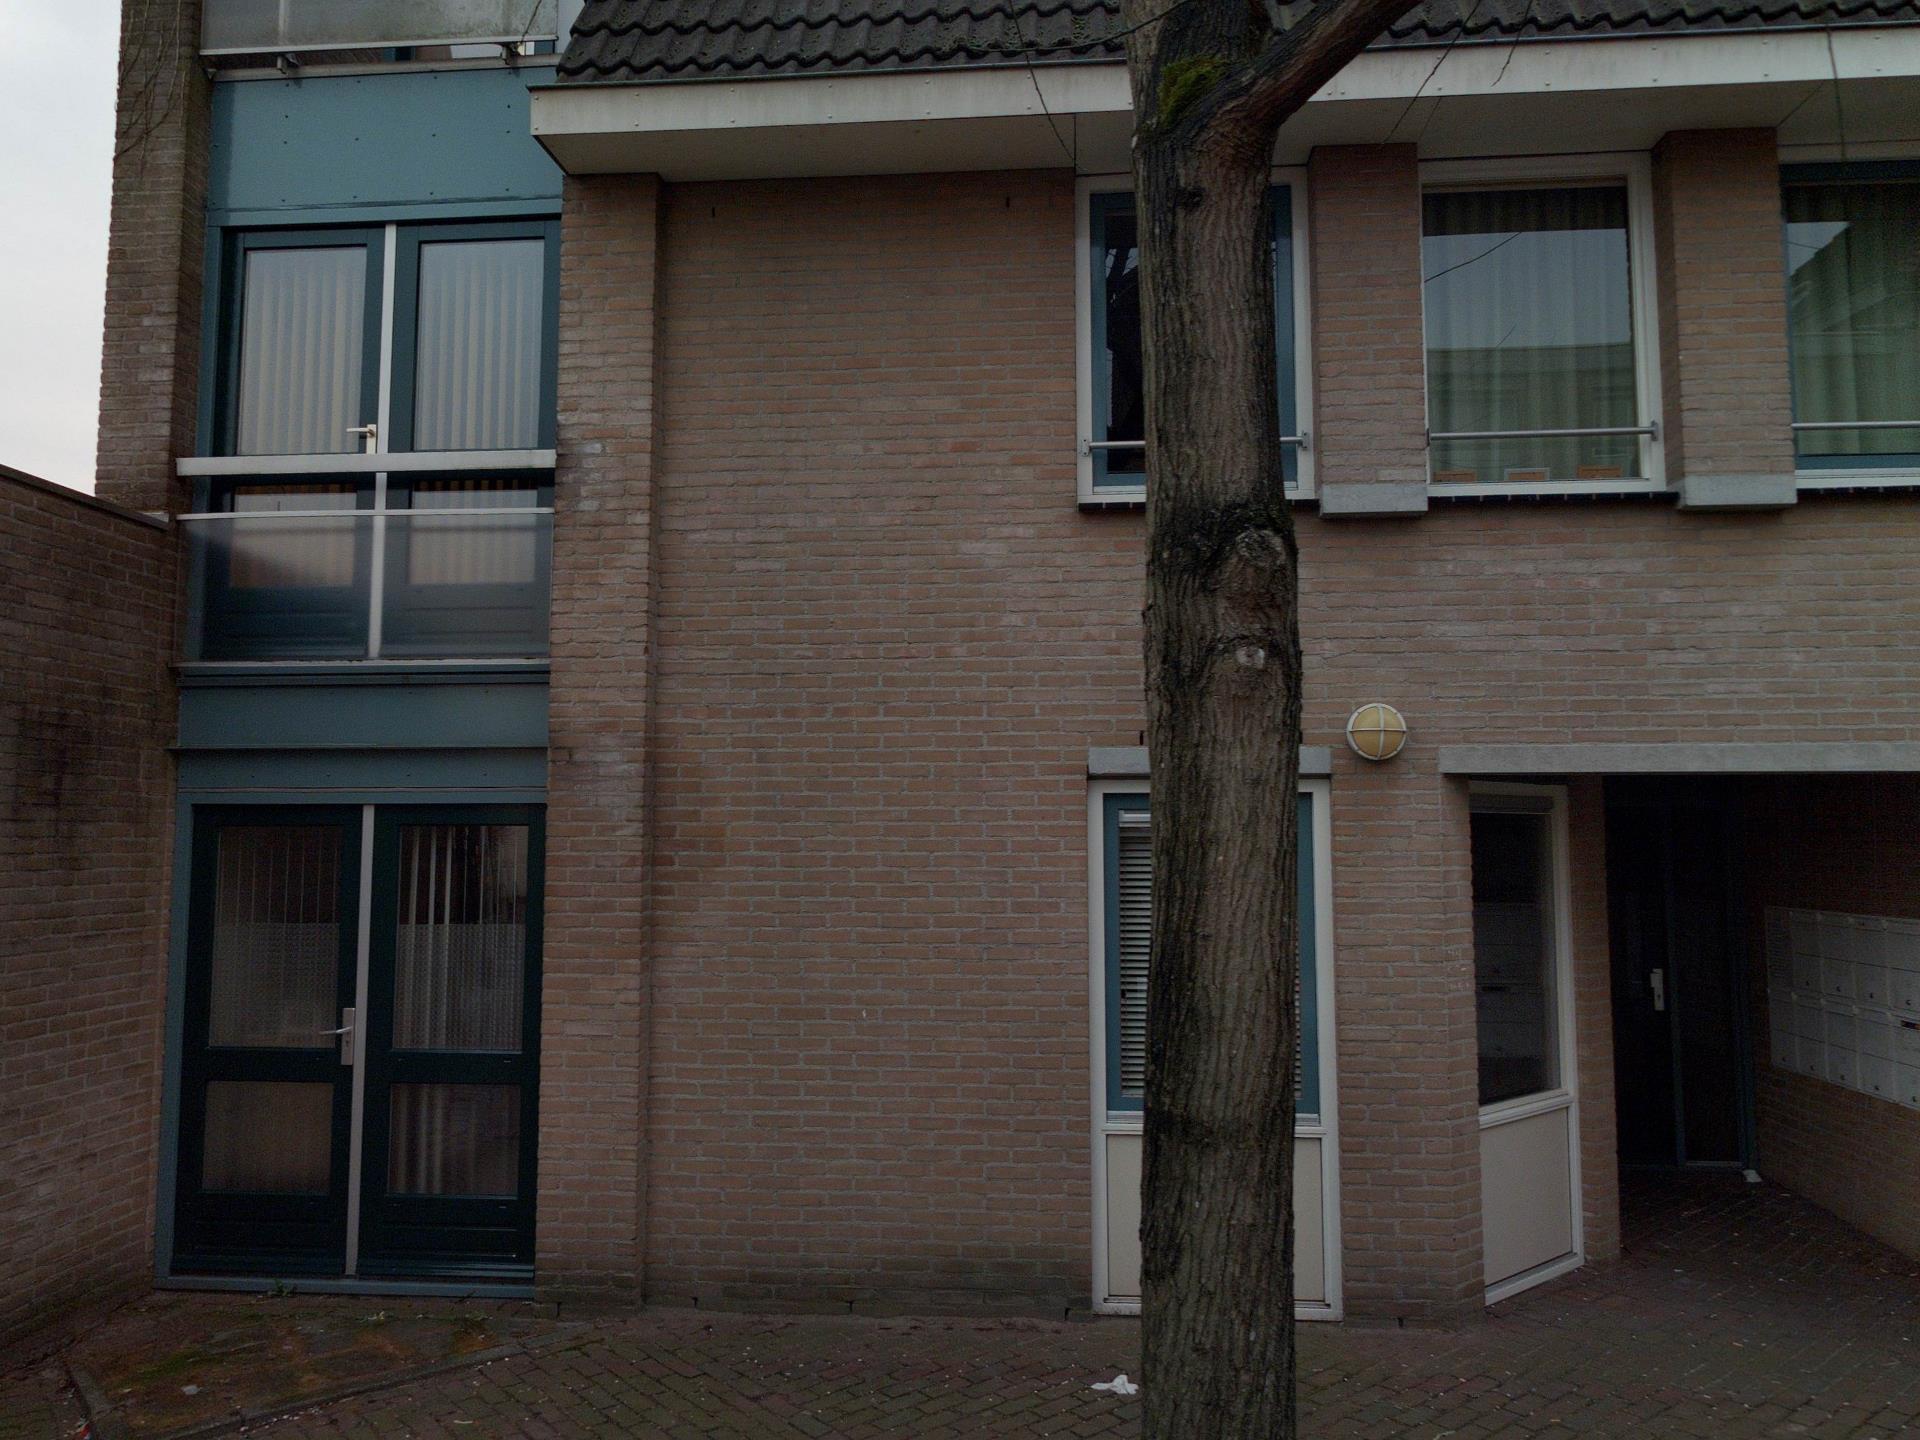 Kuiperstraat 12, 4701 HW Roosendaal, Nederland